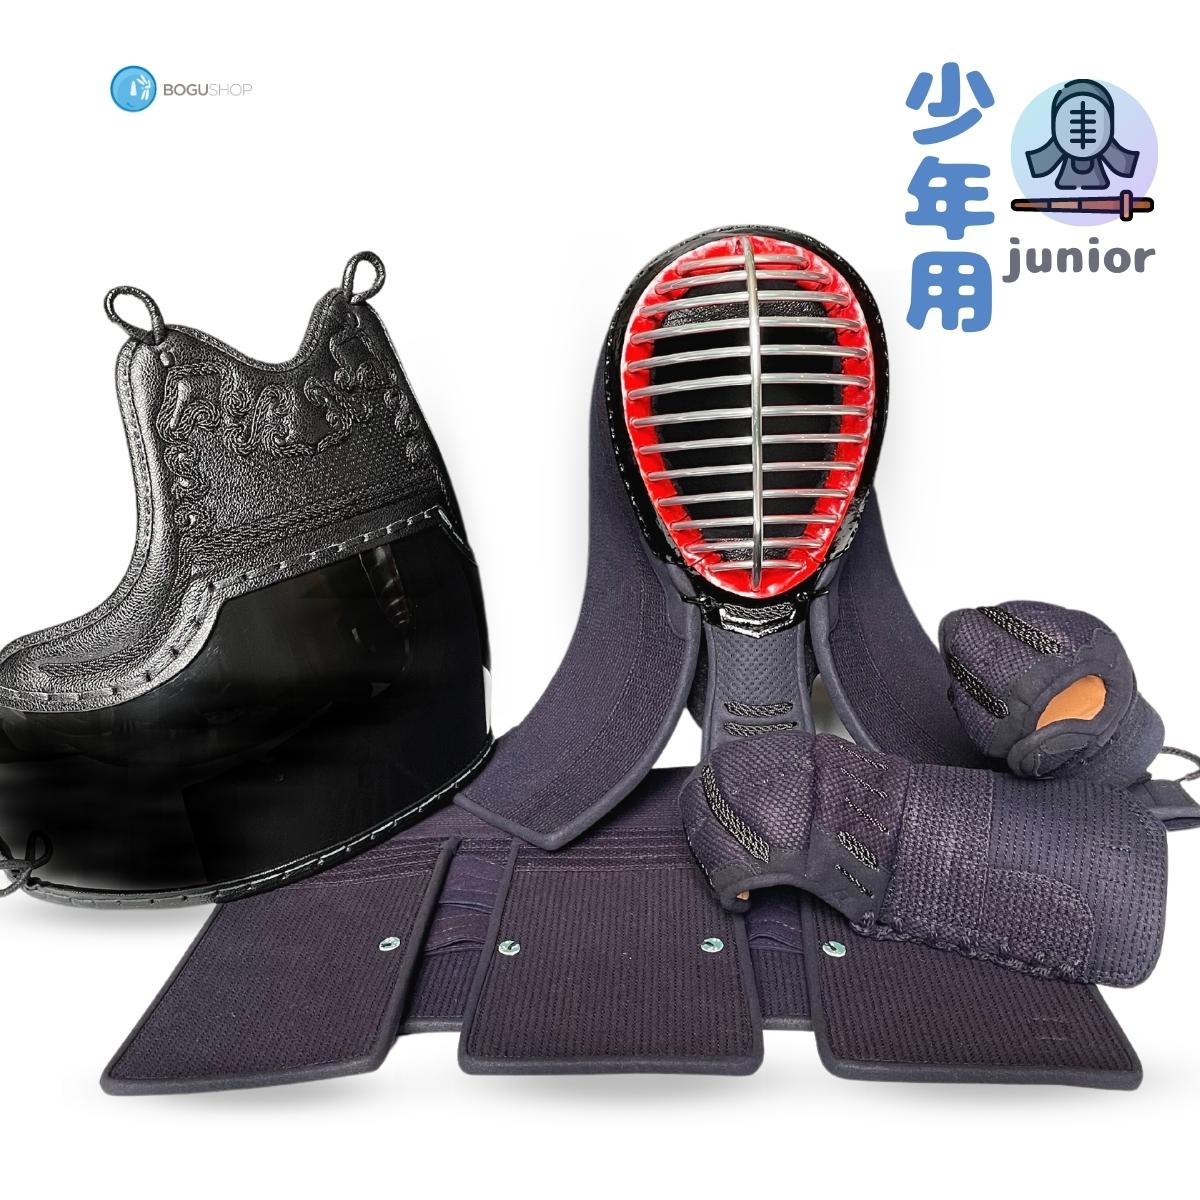 [Orizashi / Clarino Leather] Junior Bogu Set